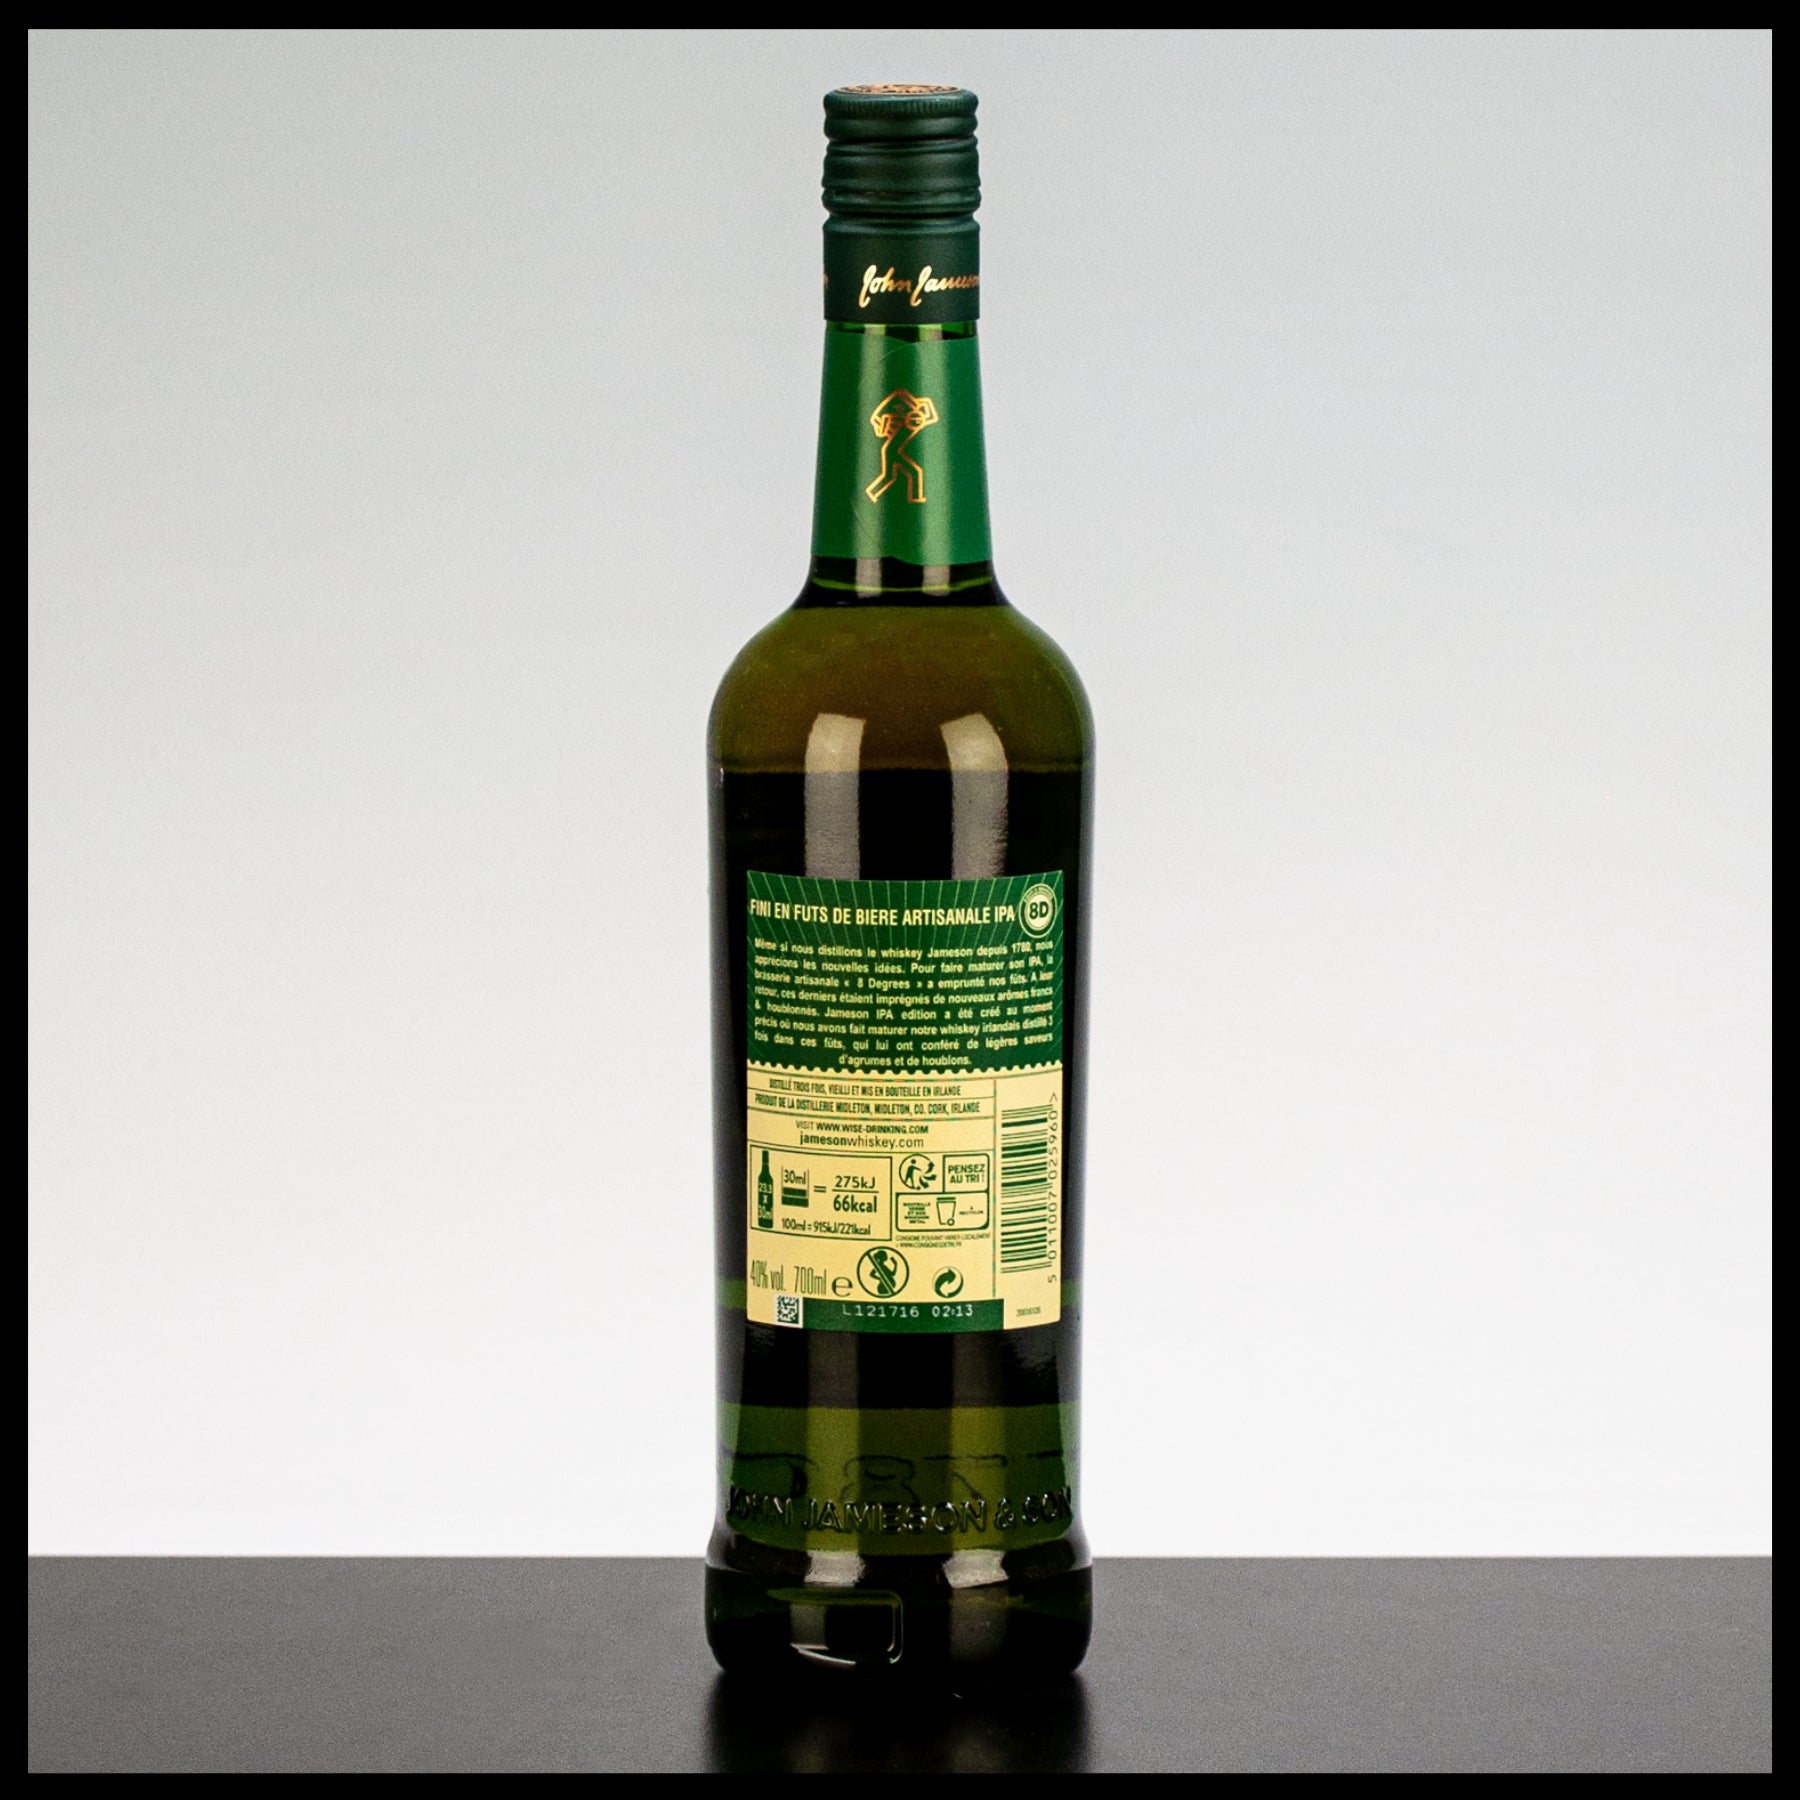 Jameson Caskmates Irish Whiskey IPA Edition 0,7L - 40% Vol. - Trinklusiv